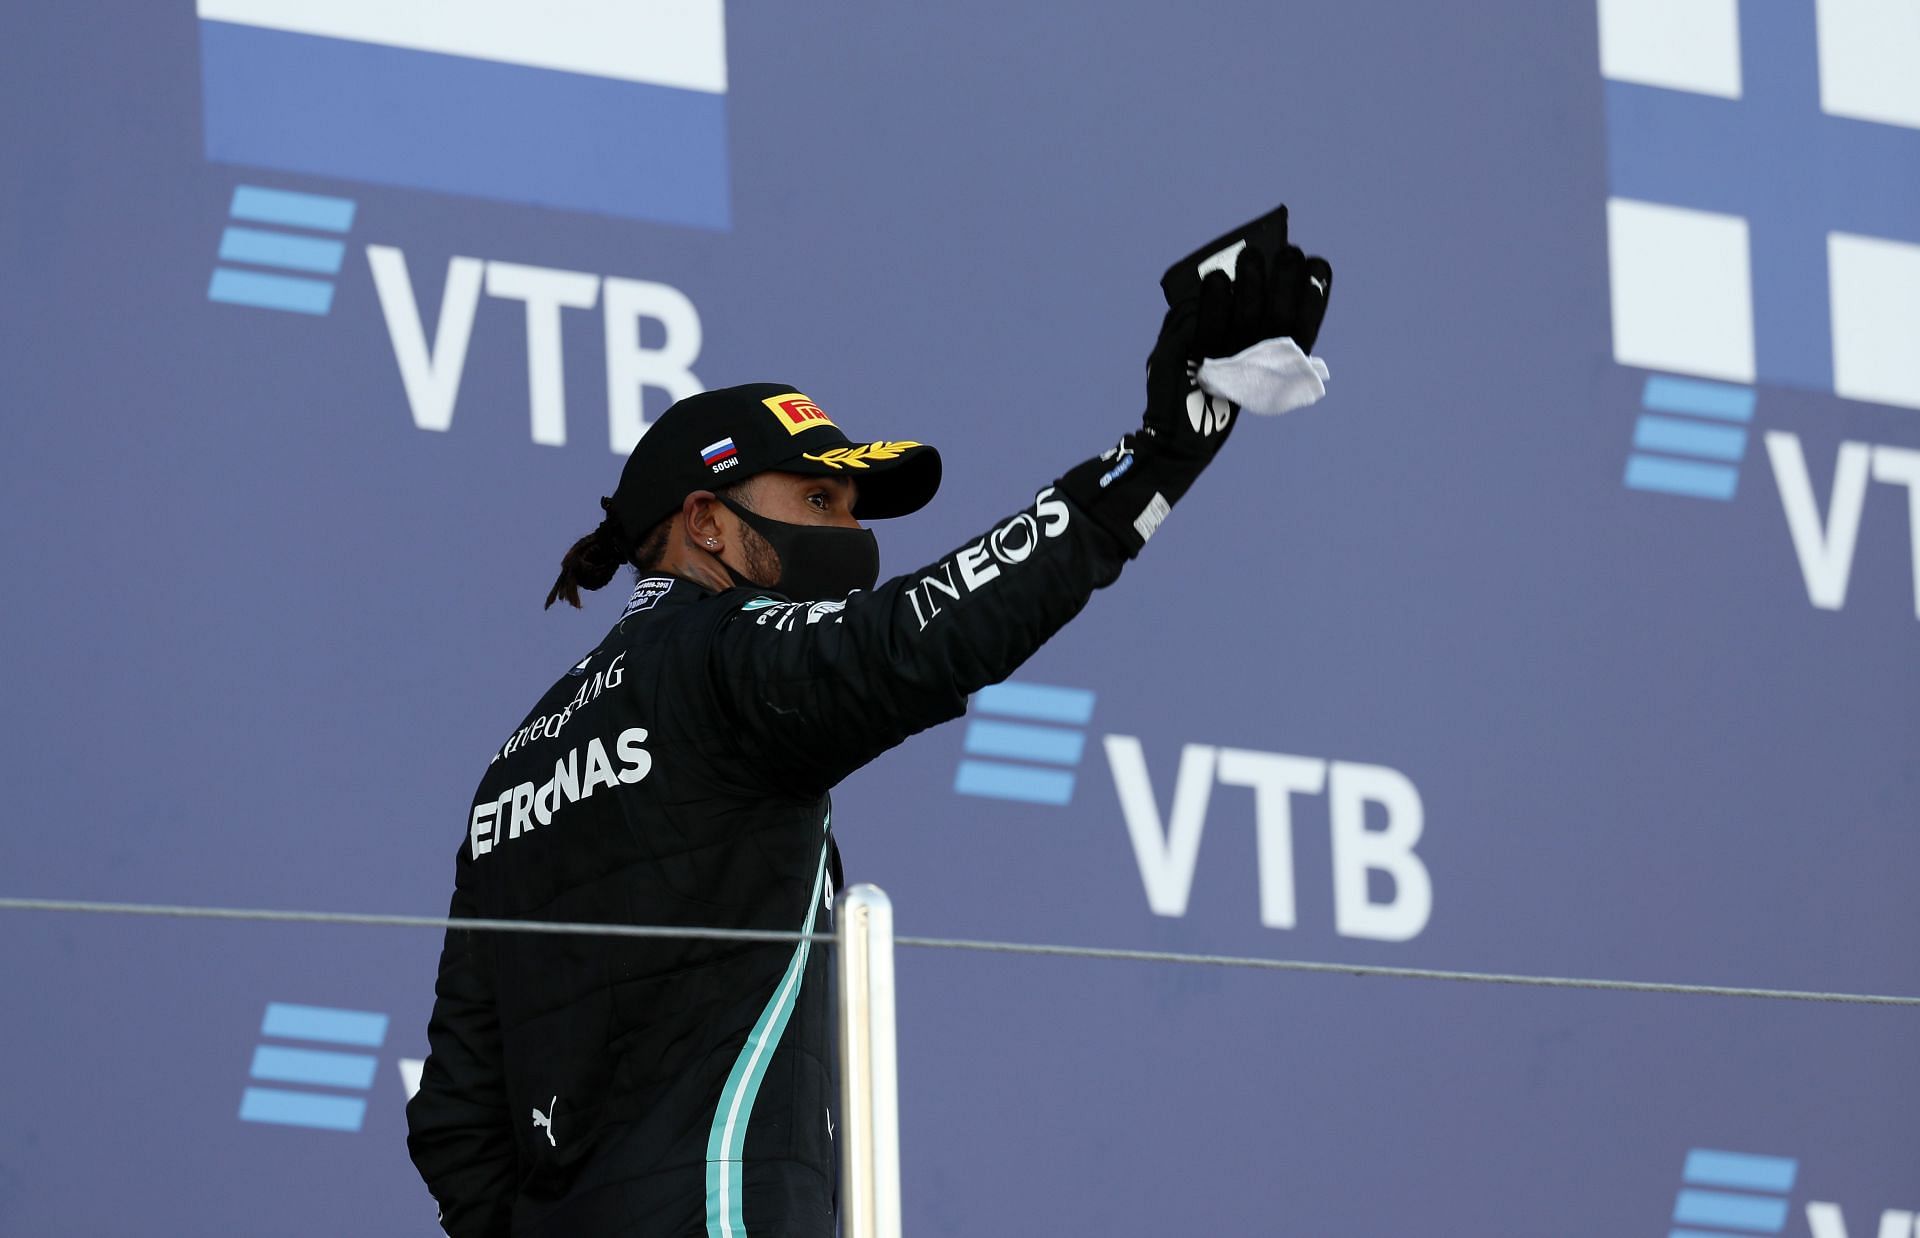 Lewis Hamilton at the 2020 Russian Grand Prix podium (Photo by Yuri Kochetkov - Pool/Getty Images)